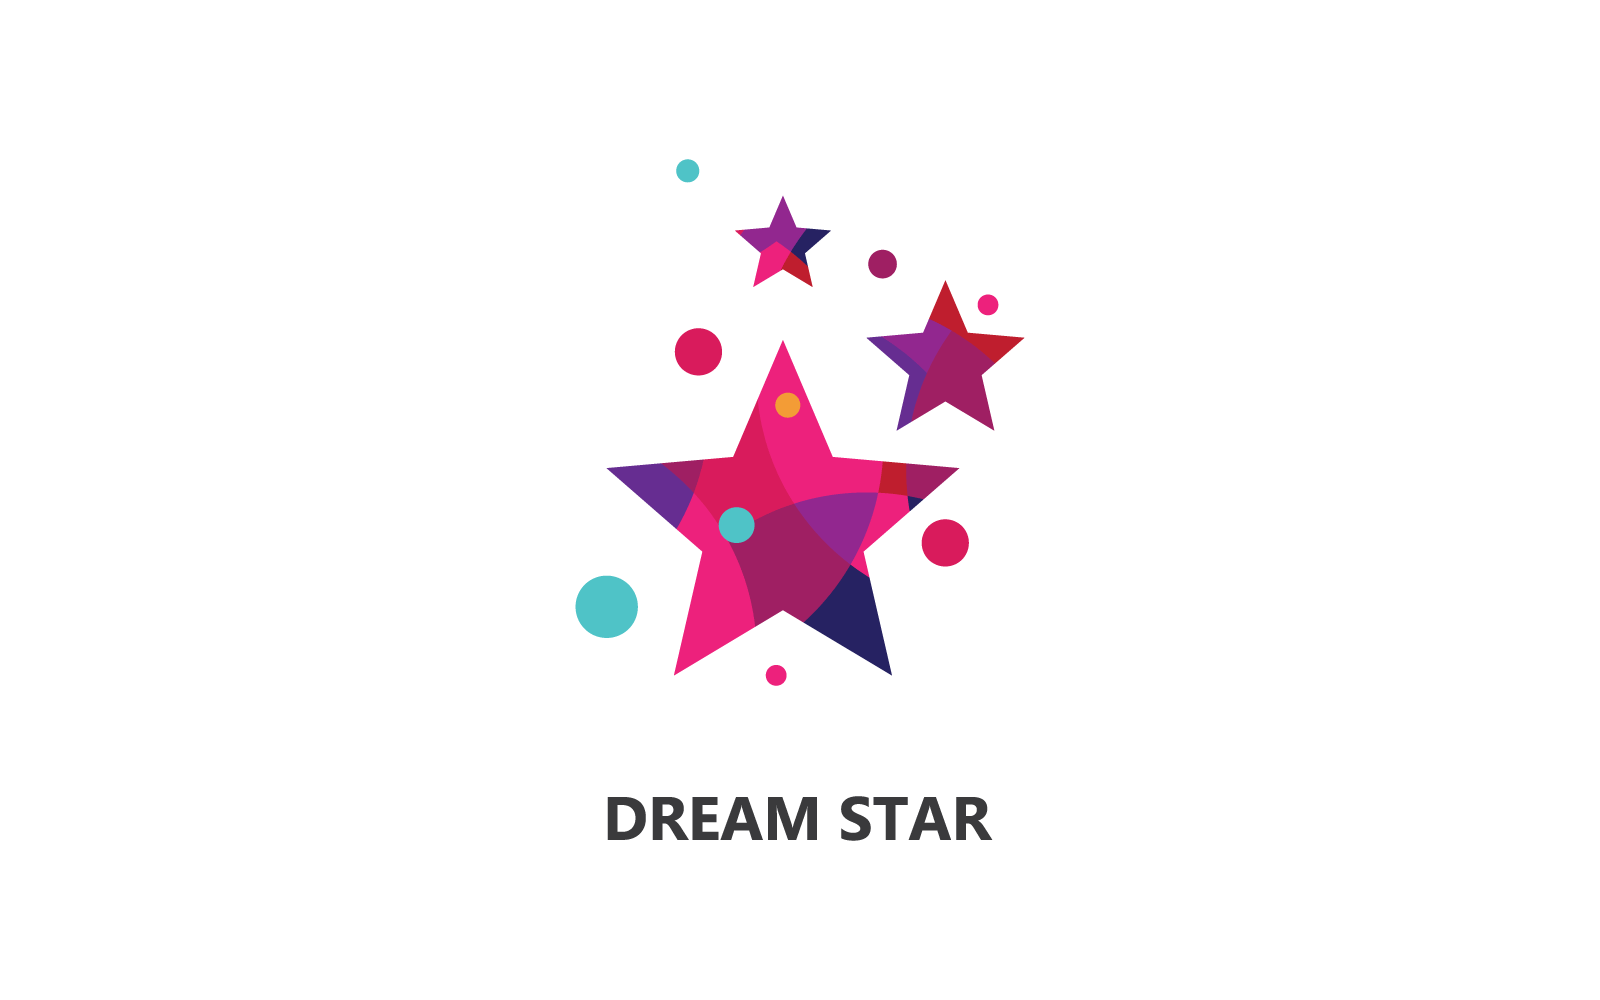 Dreams star logo vector design